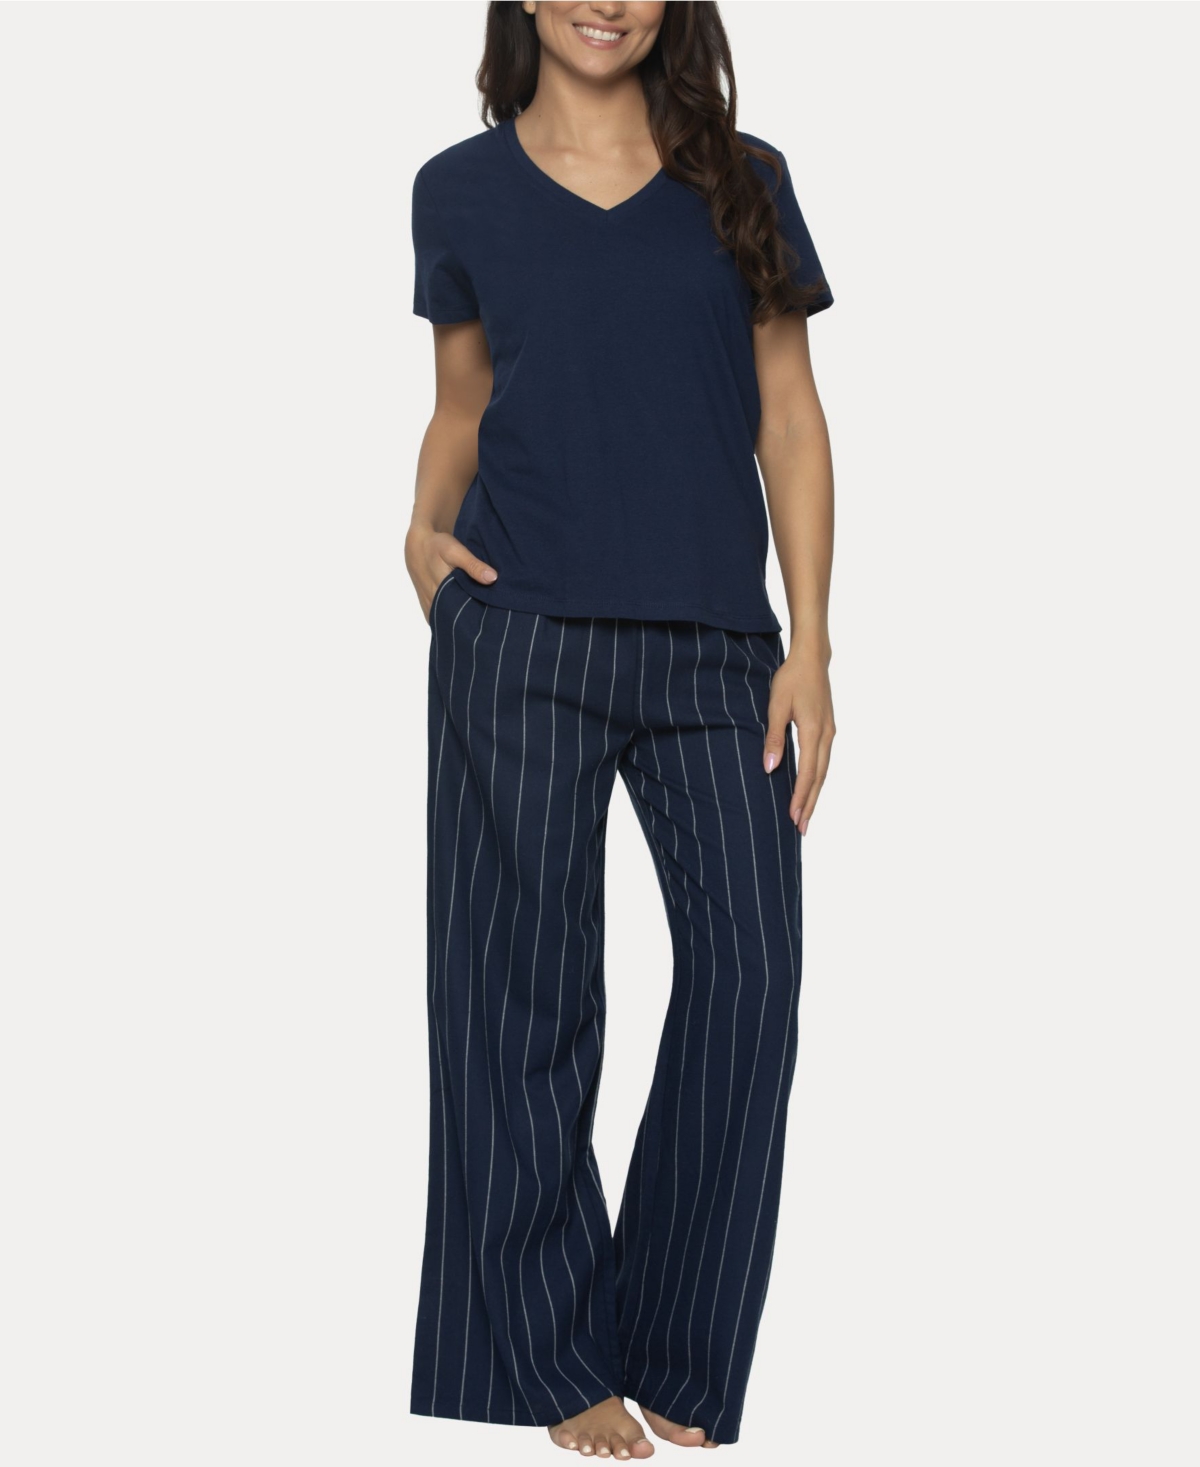 Women's Mirielle 2 Pc. Short Sleeve Pajama Set - Peacoat with Ivory Pinstripe